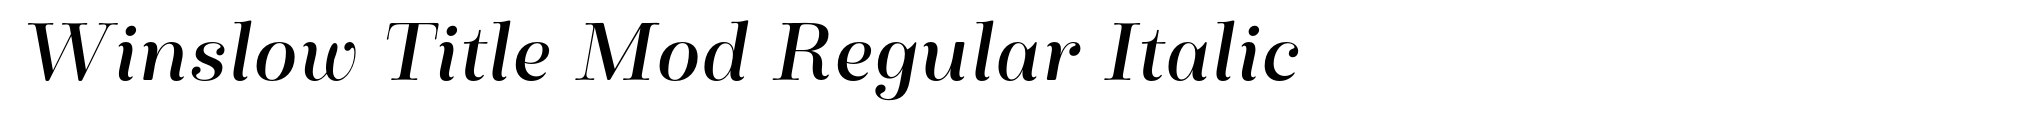 Winslow Title Mod Regular Italic image